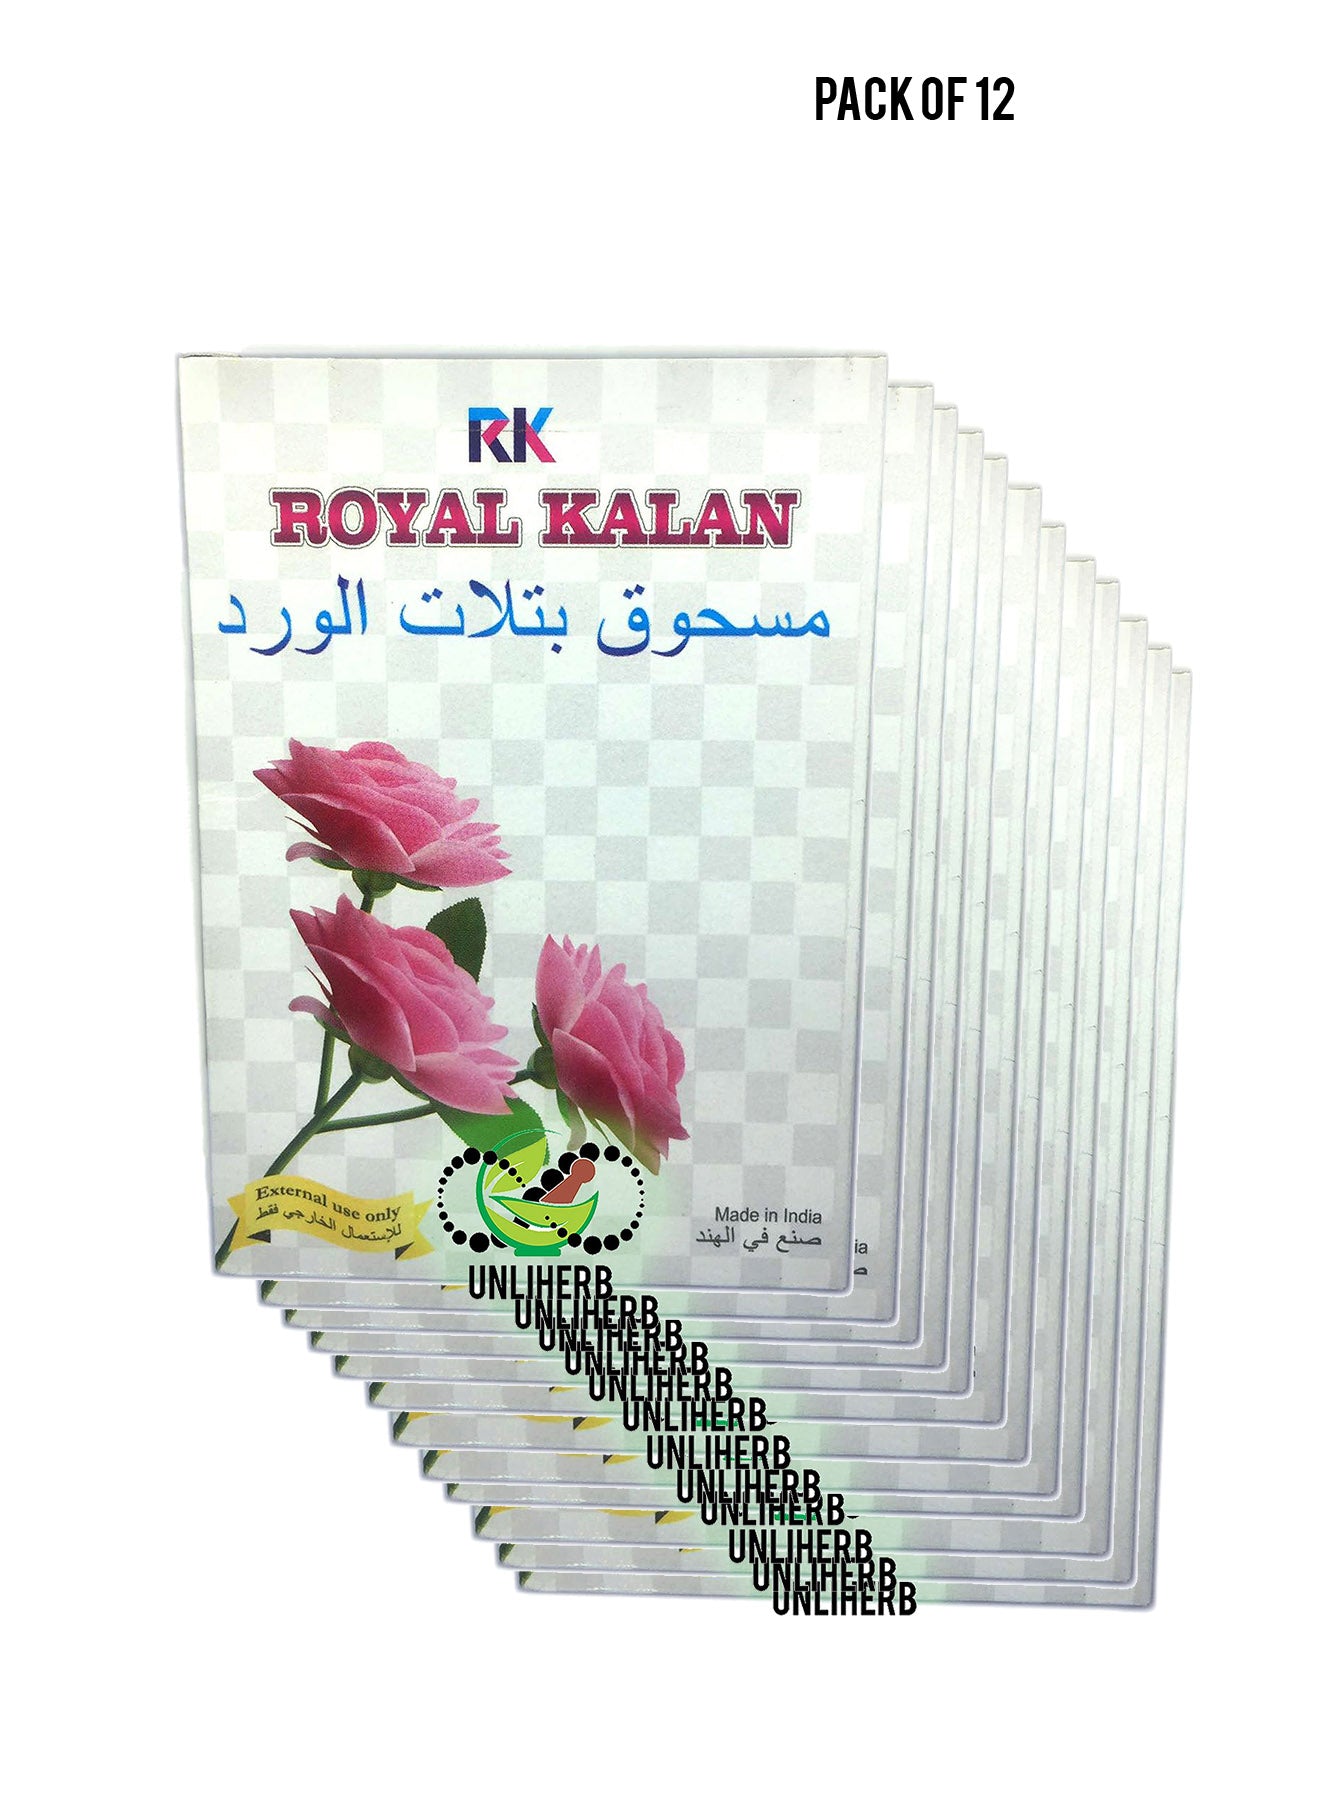 Royal Kalan Rose Petal Powder 100g Value Pack of 12 